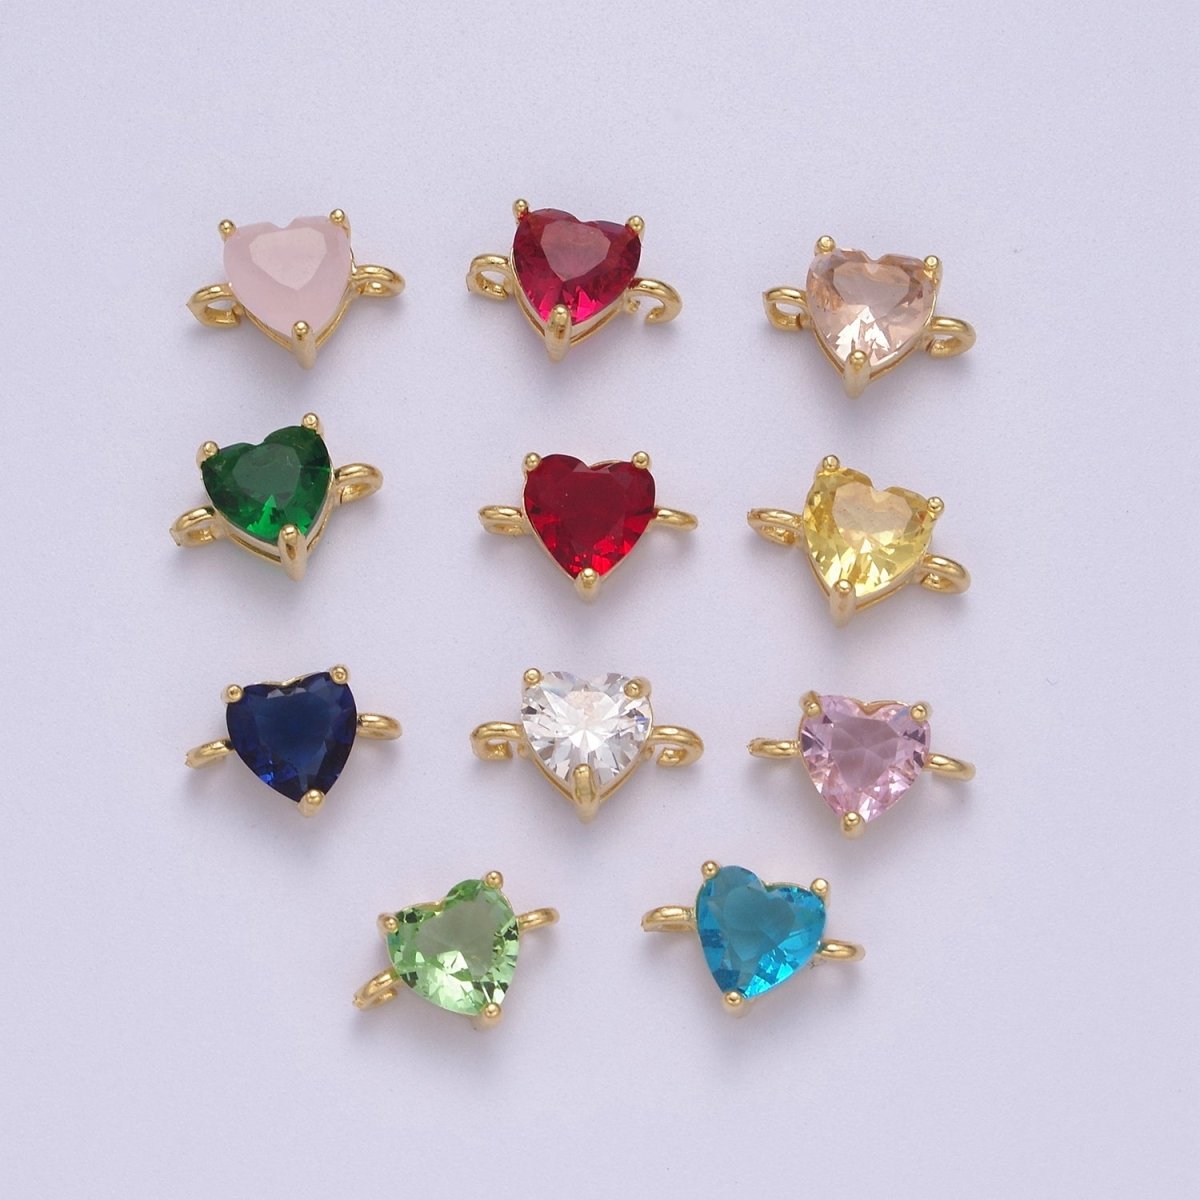 Colorful Little Heart Connectors Charms Mini Valentine Connectors Tiny Heart Charms Jewelry Supplies 10x7mm F-629~F-640 - DLUXCA